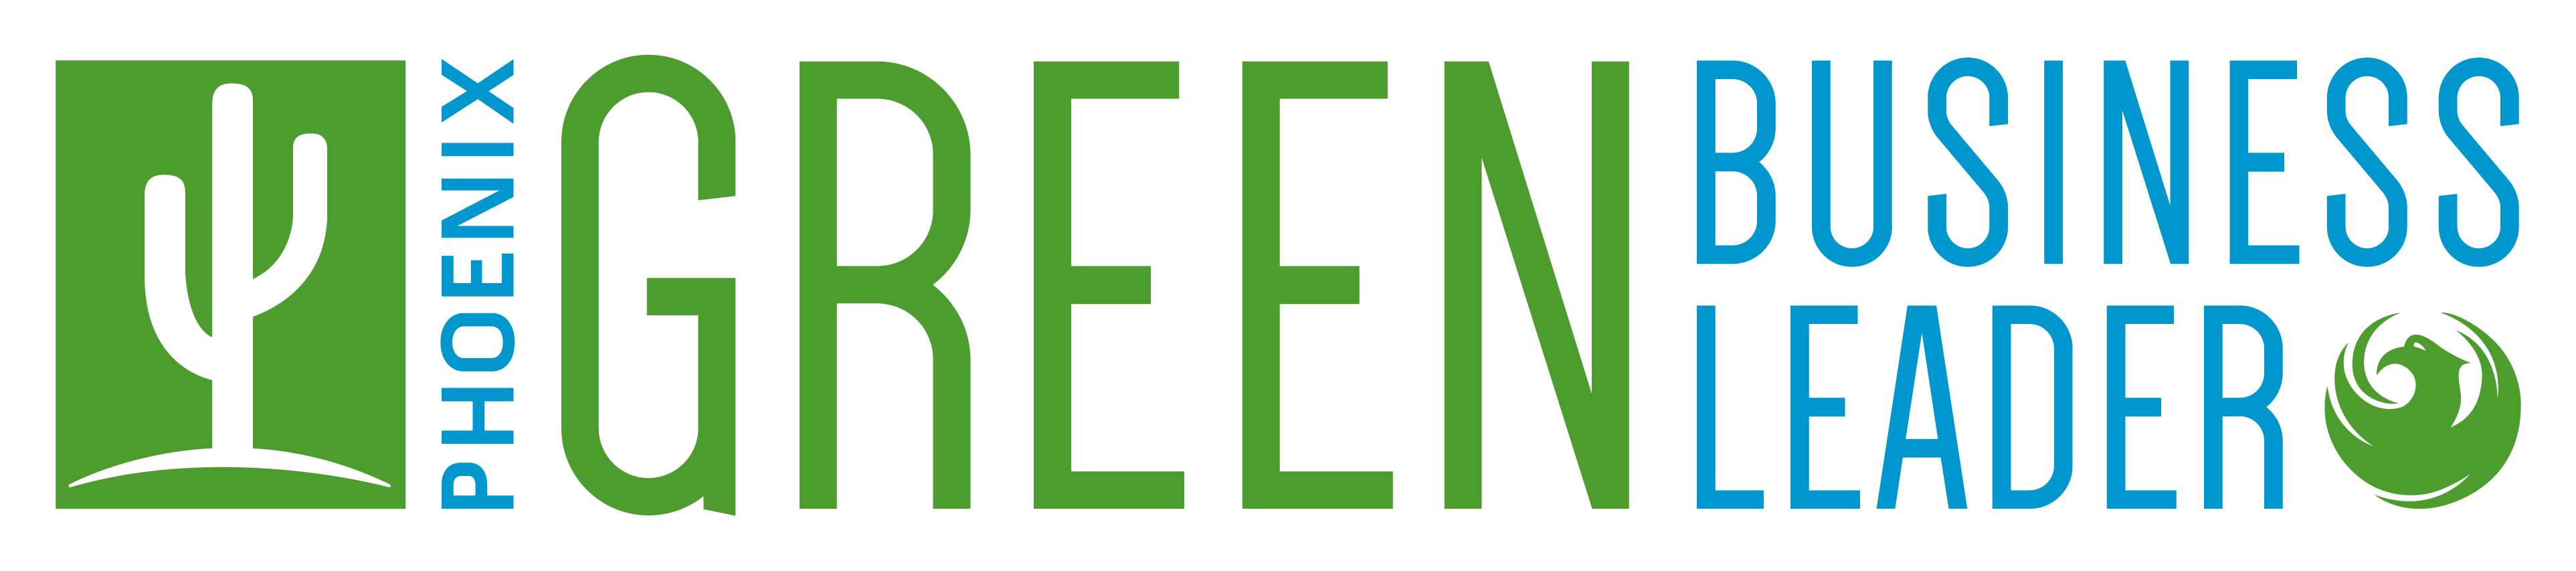 Green Business Leader logo